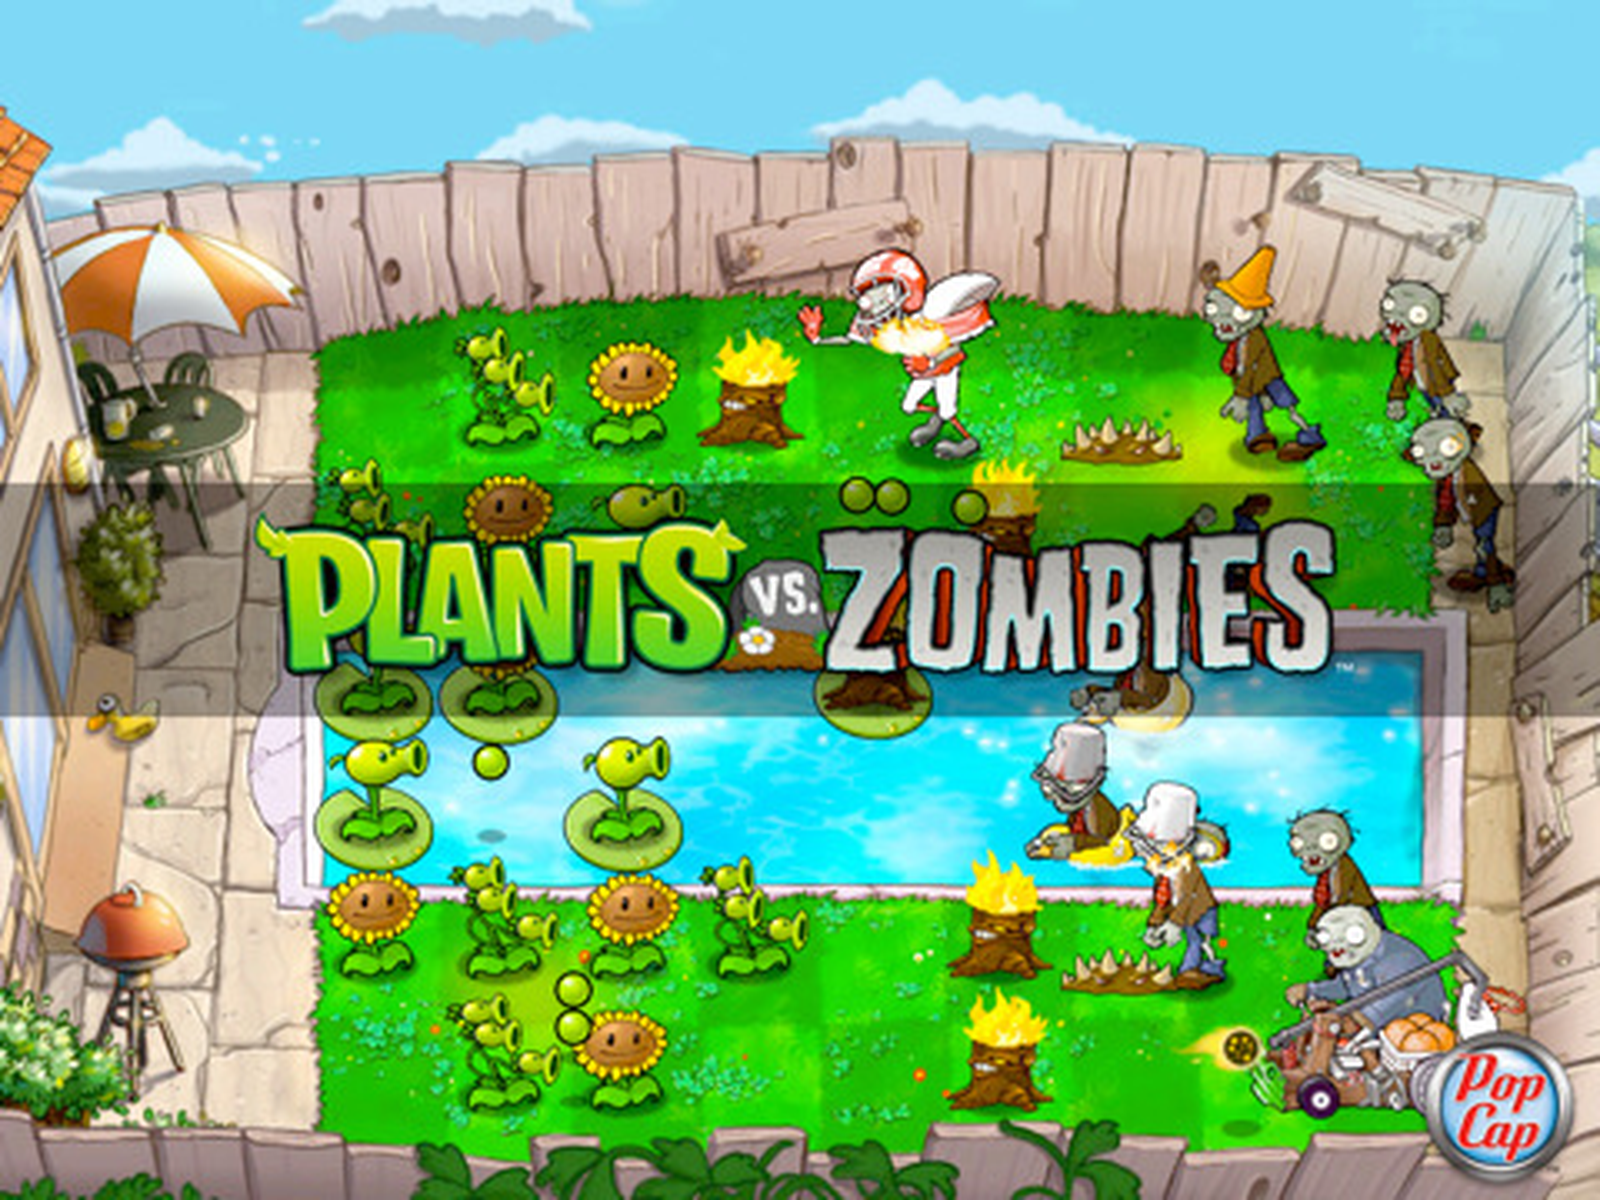 The Making of PopCap's Plants vs Zombies